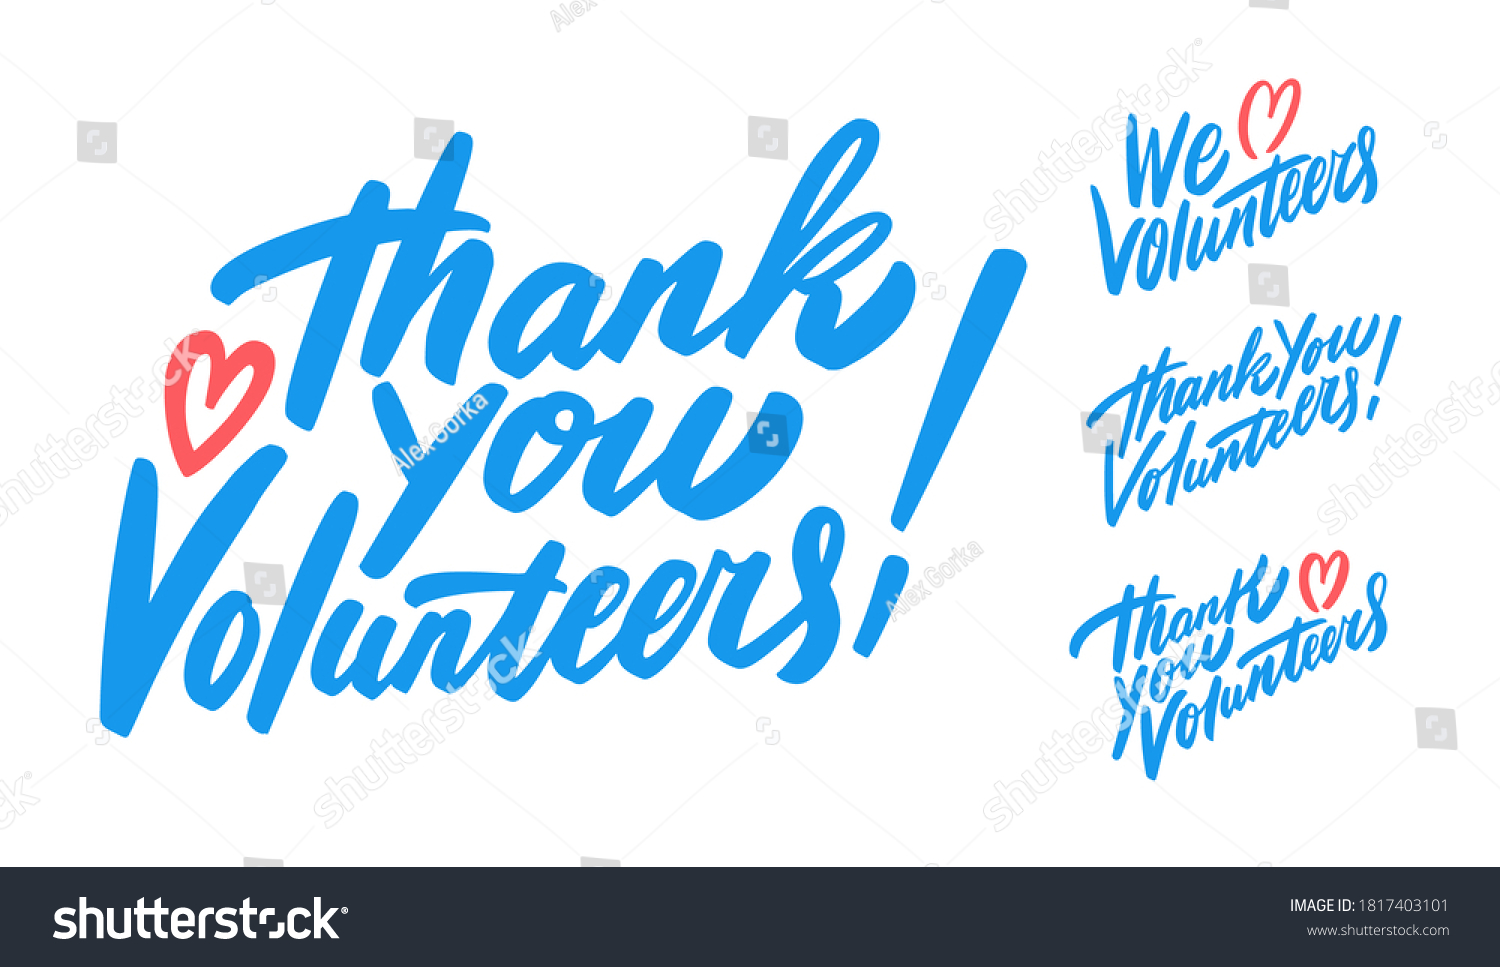 Thank You Volunteers We Love Volunteers Stock Vector Royalty Free 1817403101 Shutterstock